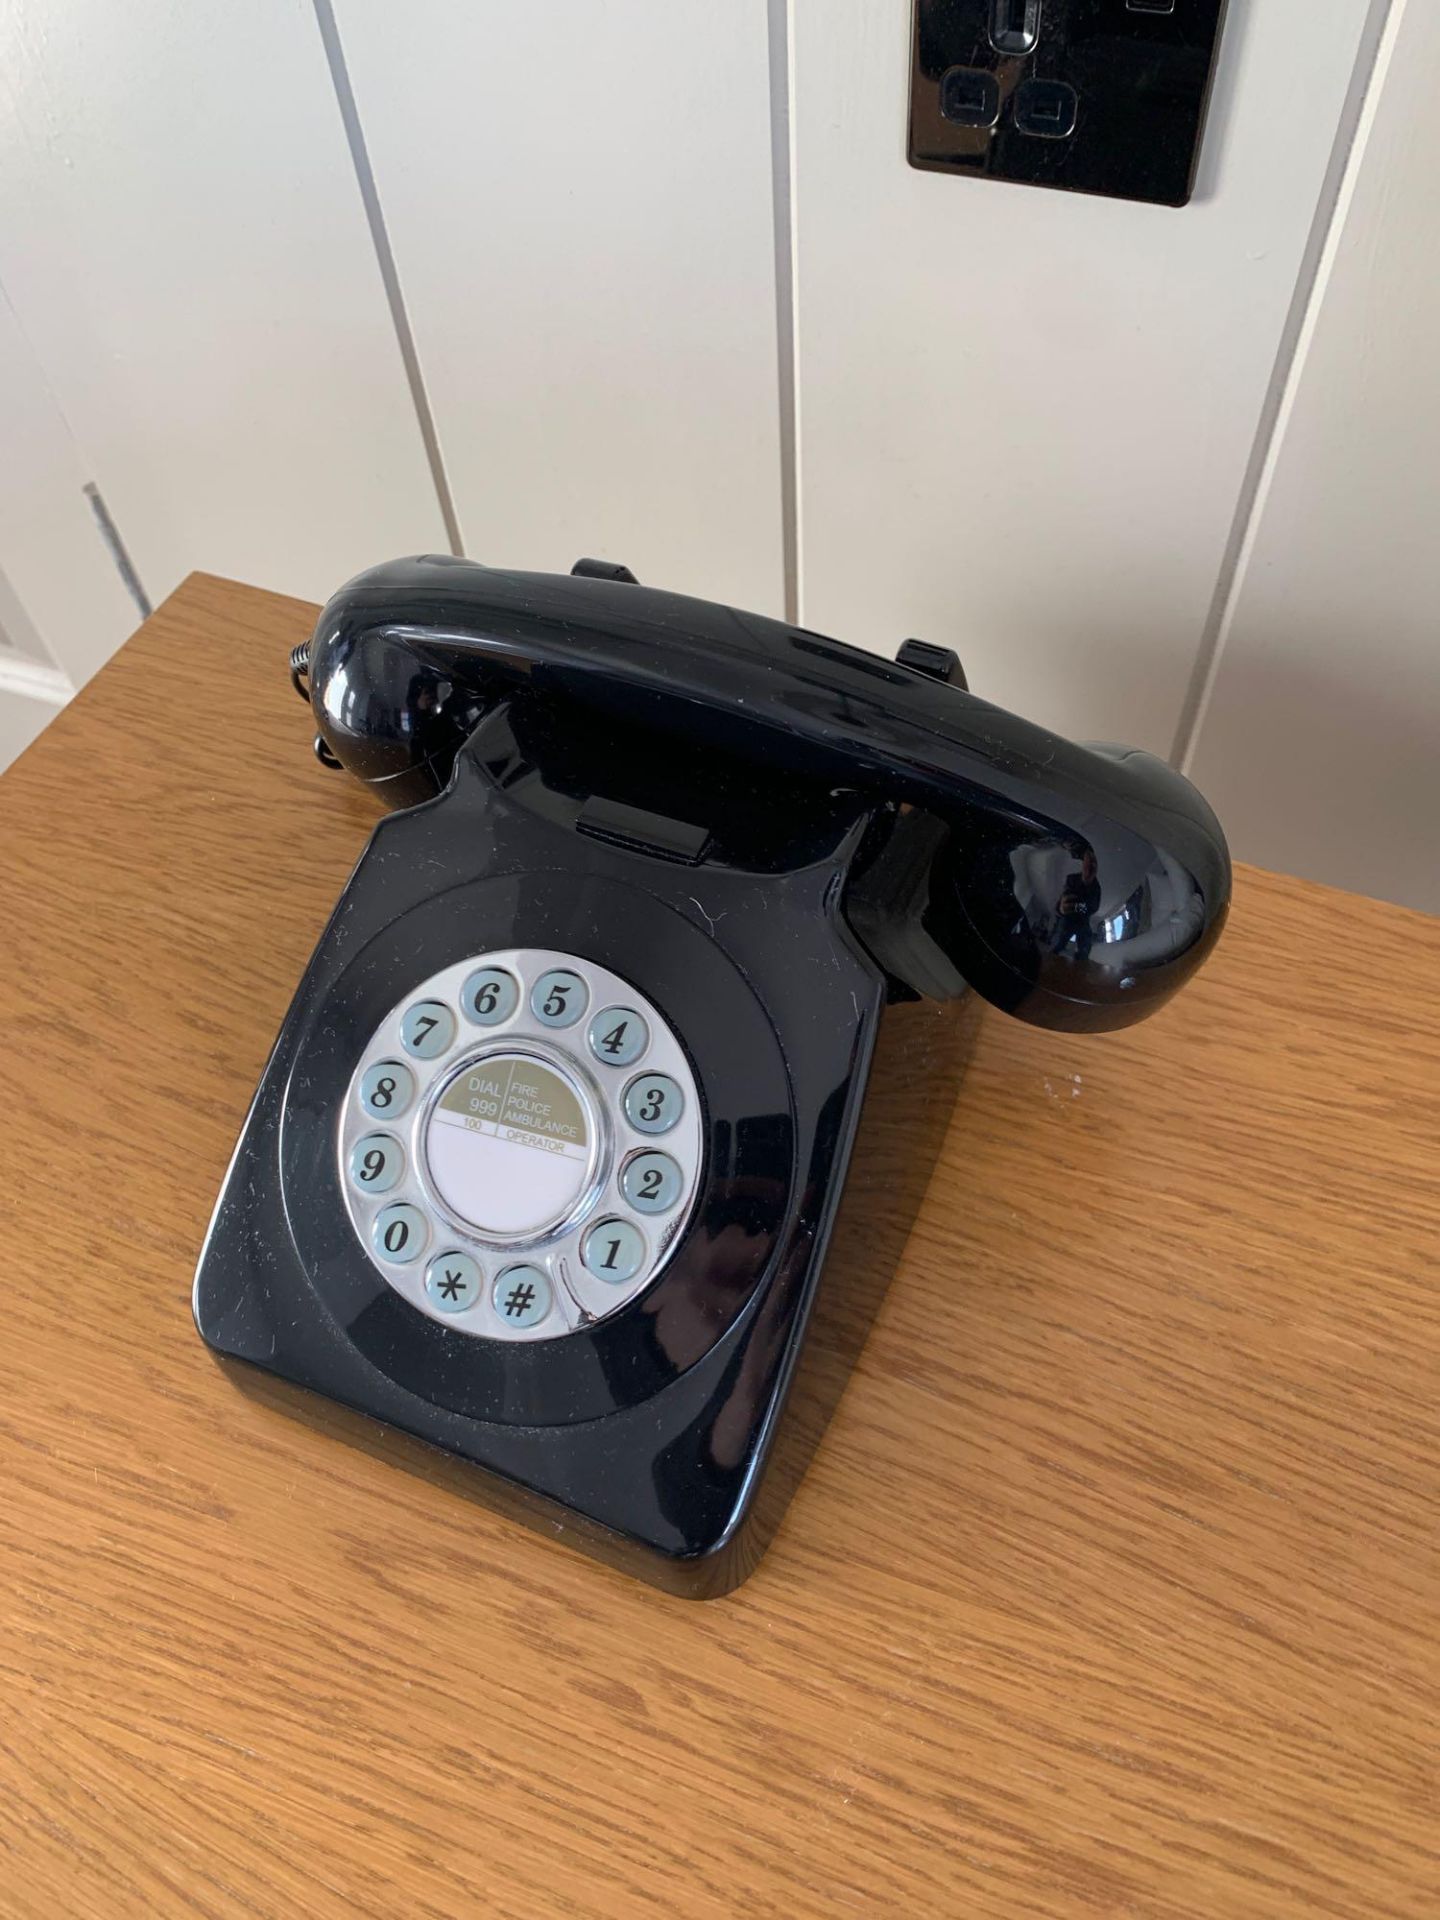 6 x Retro Digital guest phone retro design model GPO 746 Rotary Corded Telephone (109/112/115116/